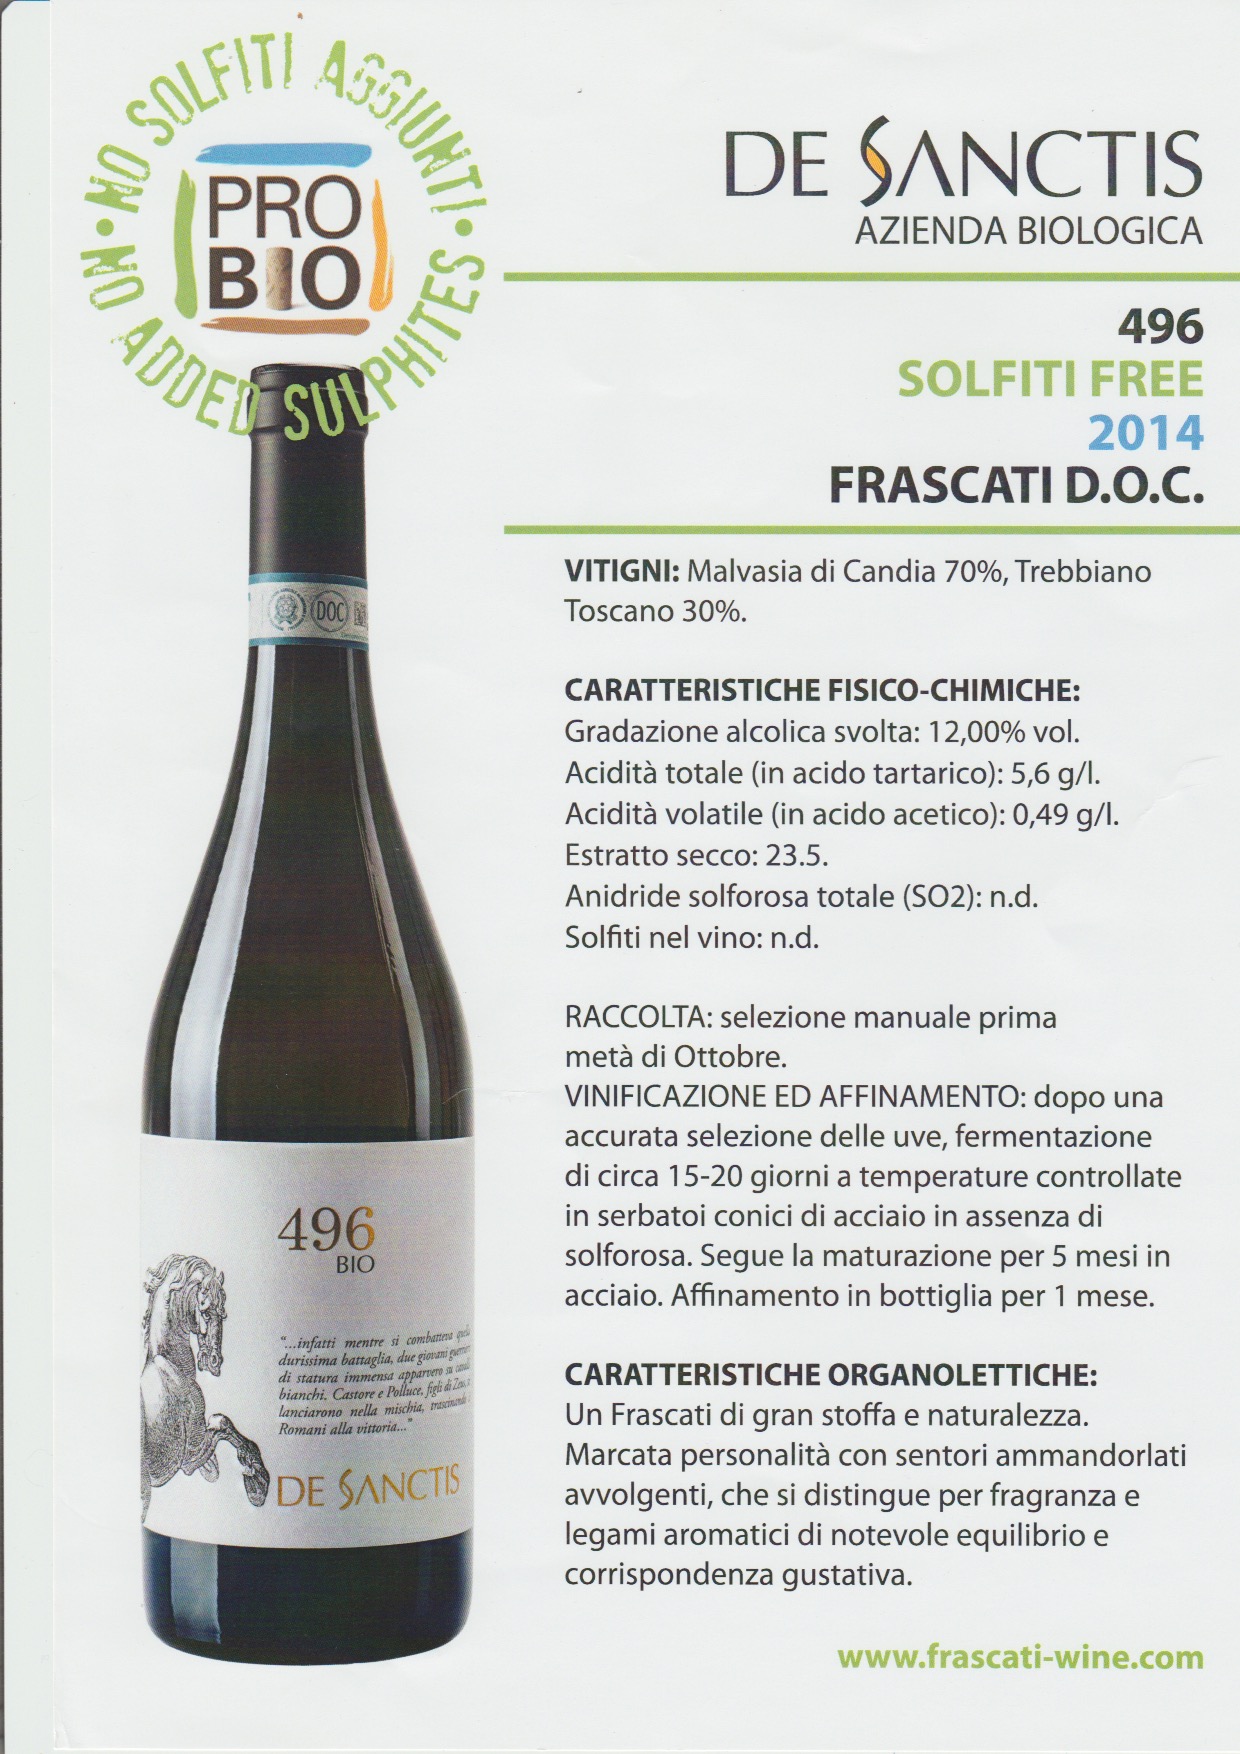 496 Solfiti Free 2014 Frascati D.O.C. De Sanctis Azienda Biologica - Porthos Edizioni 